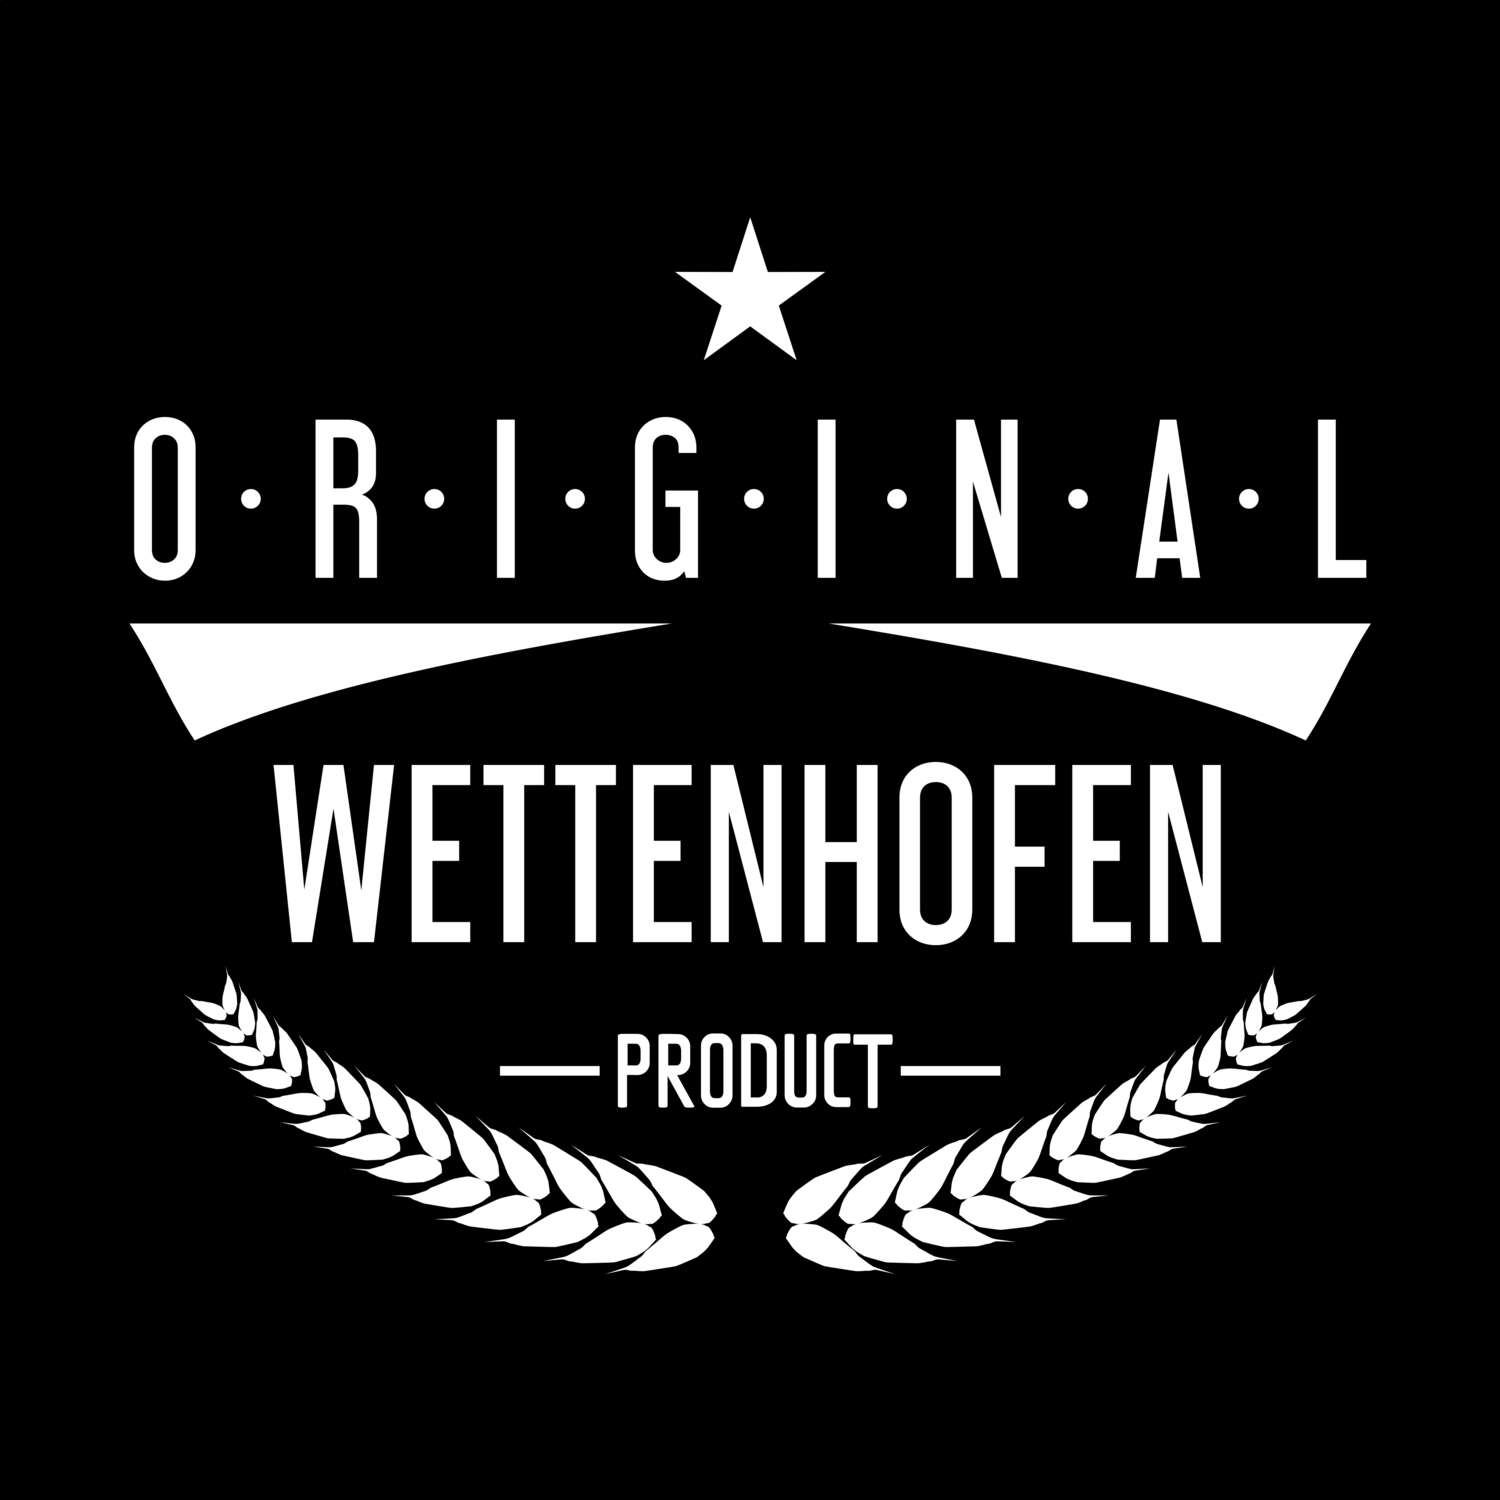 Wettenhofen T-Shirt »Original Product«